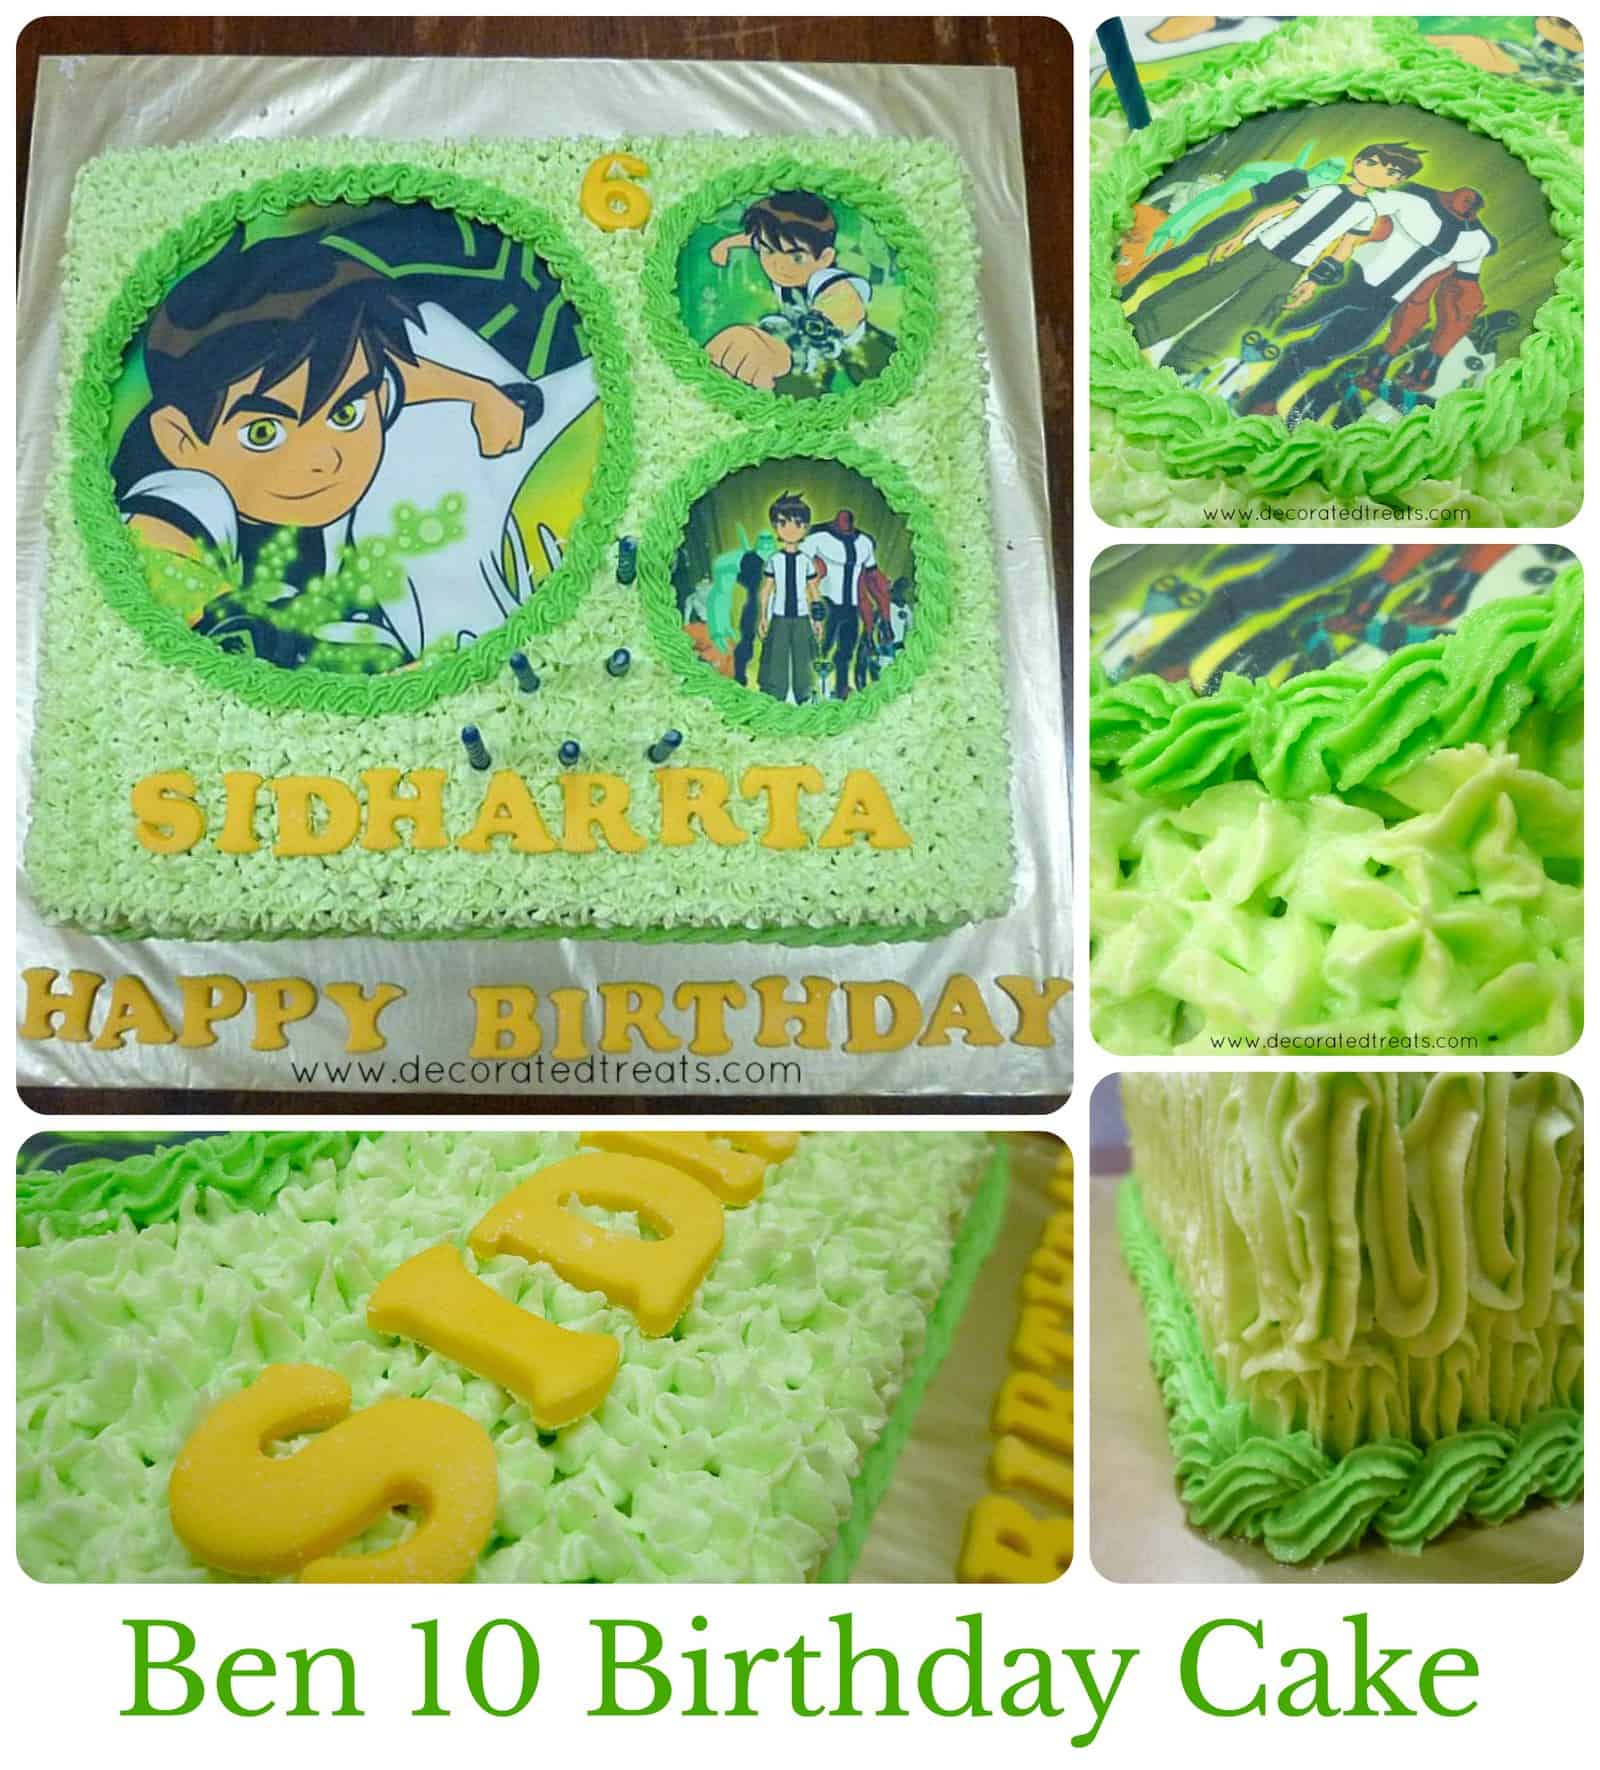 Ben 10 Birthday Cake Decorating Idea for Boys - Decorated Treats